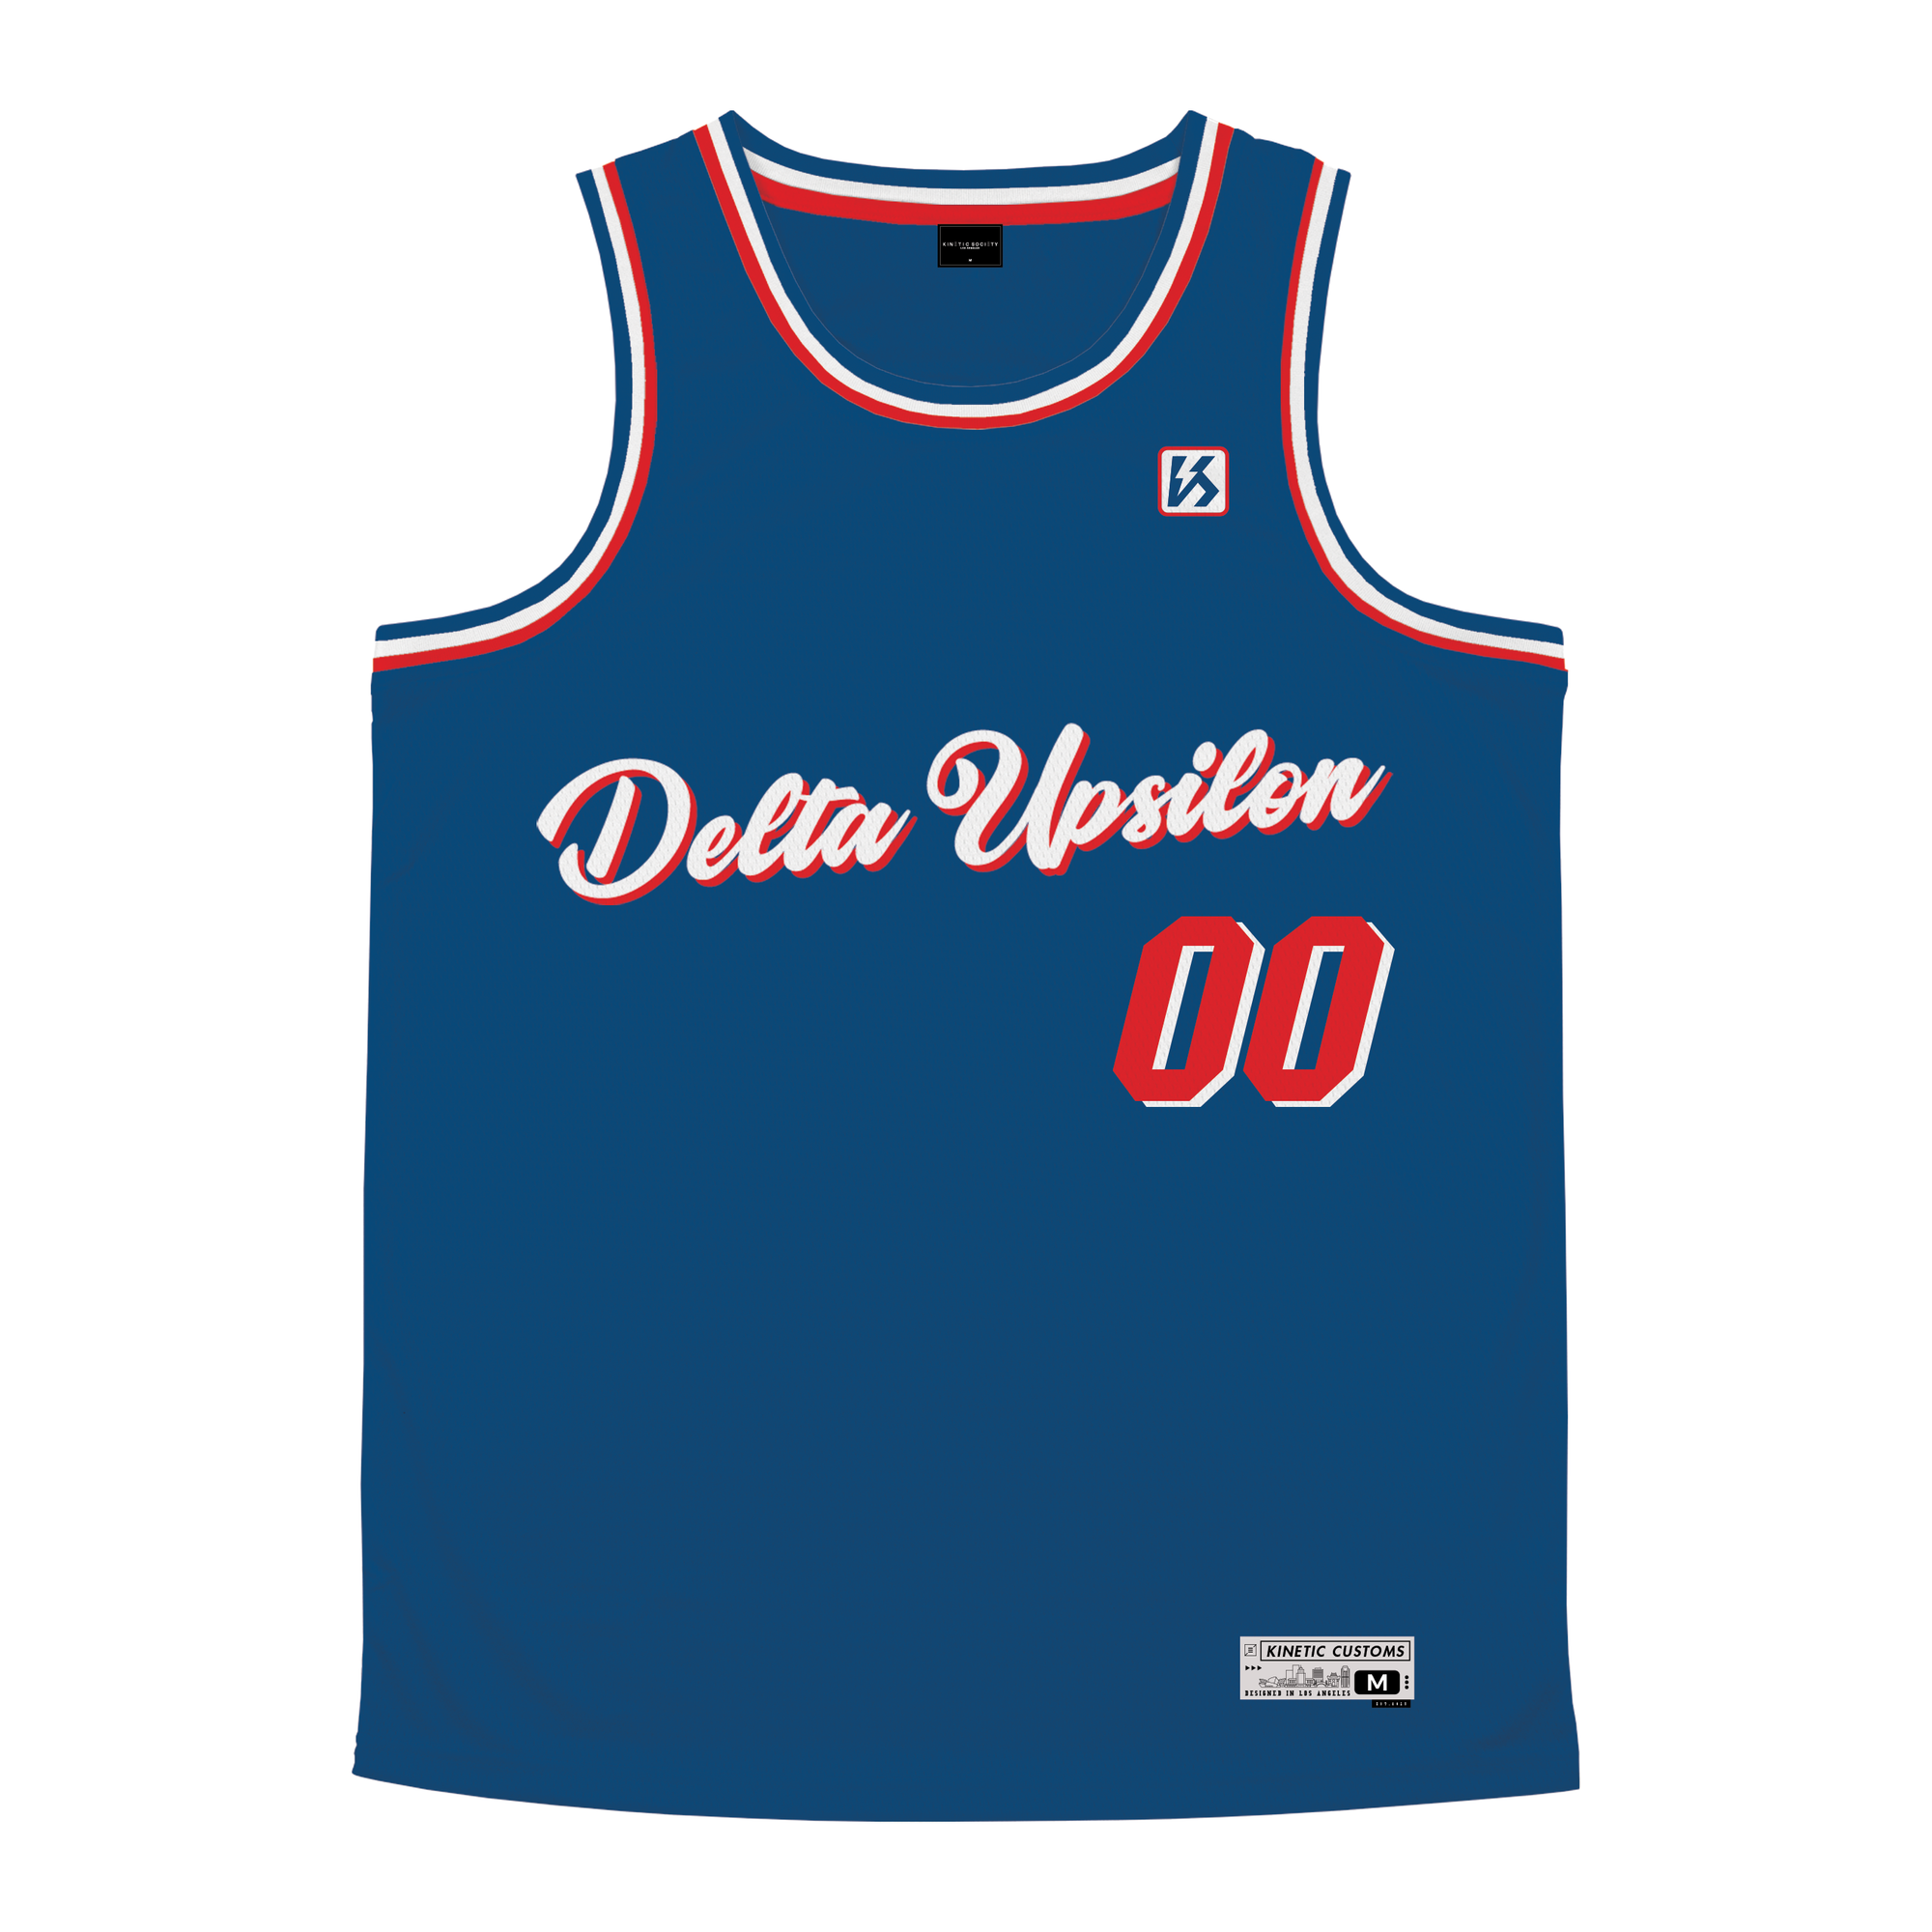 Delta Upsilon - The Dream Basketball Jersey